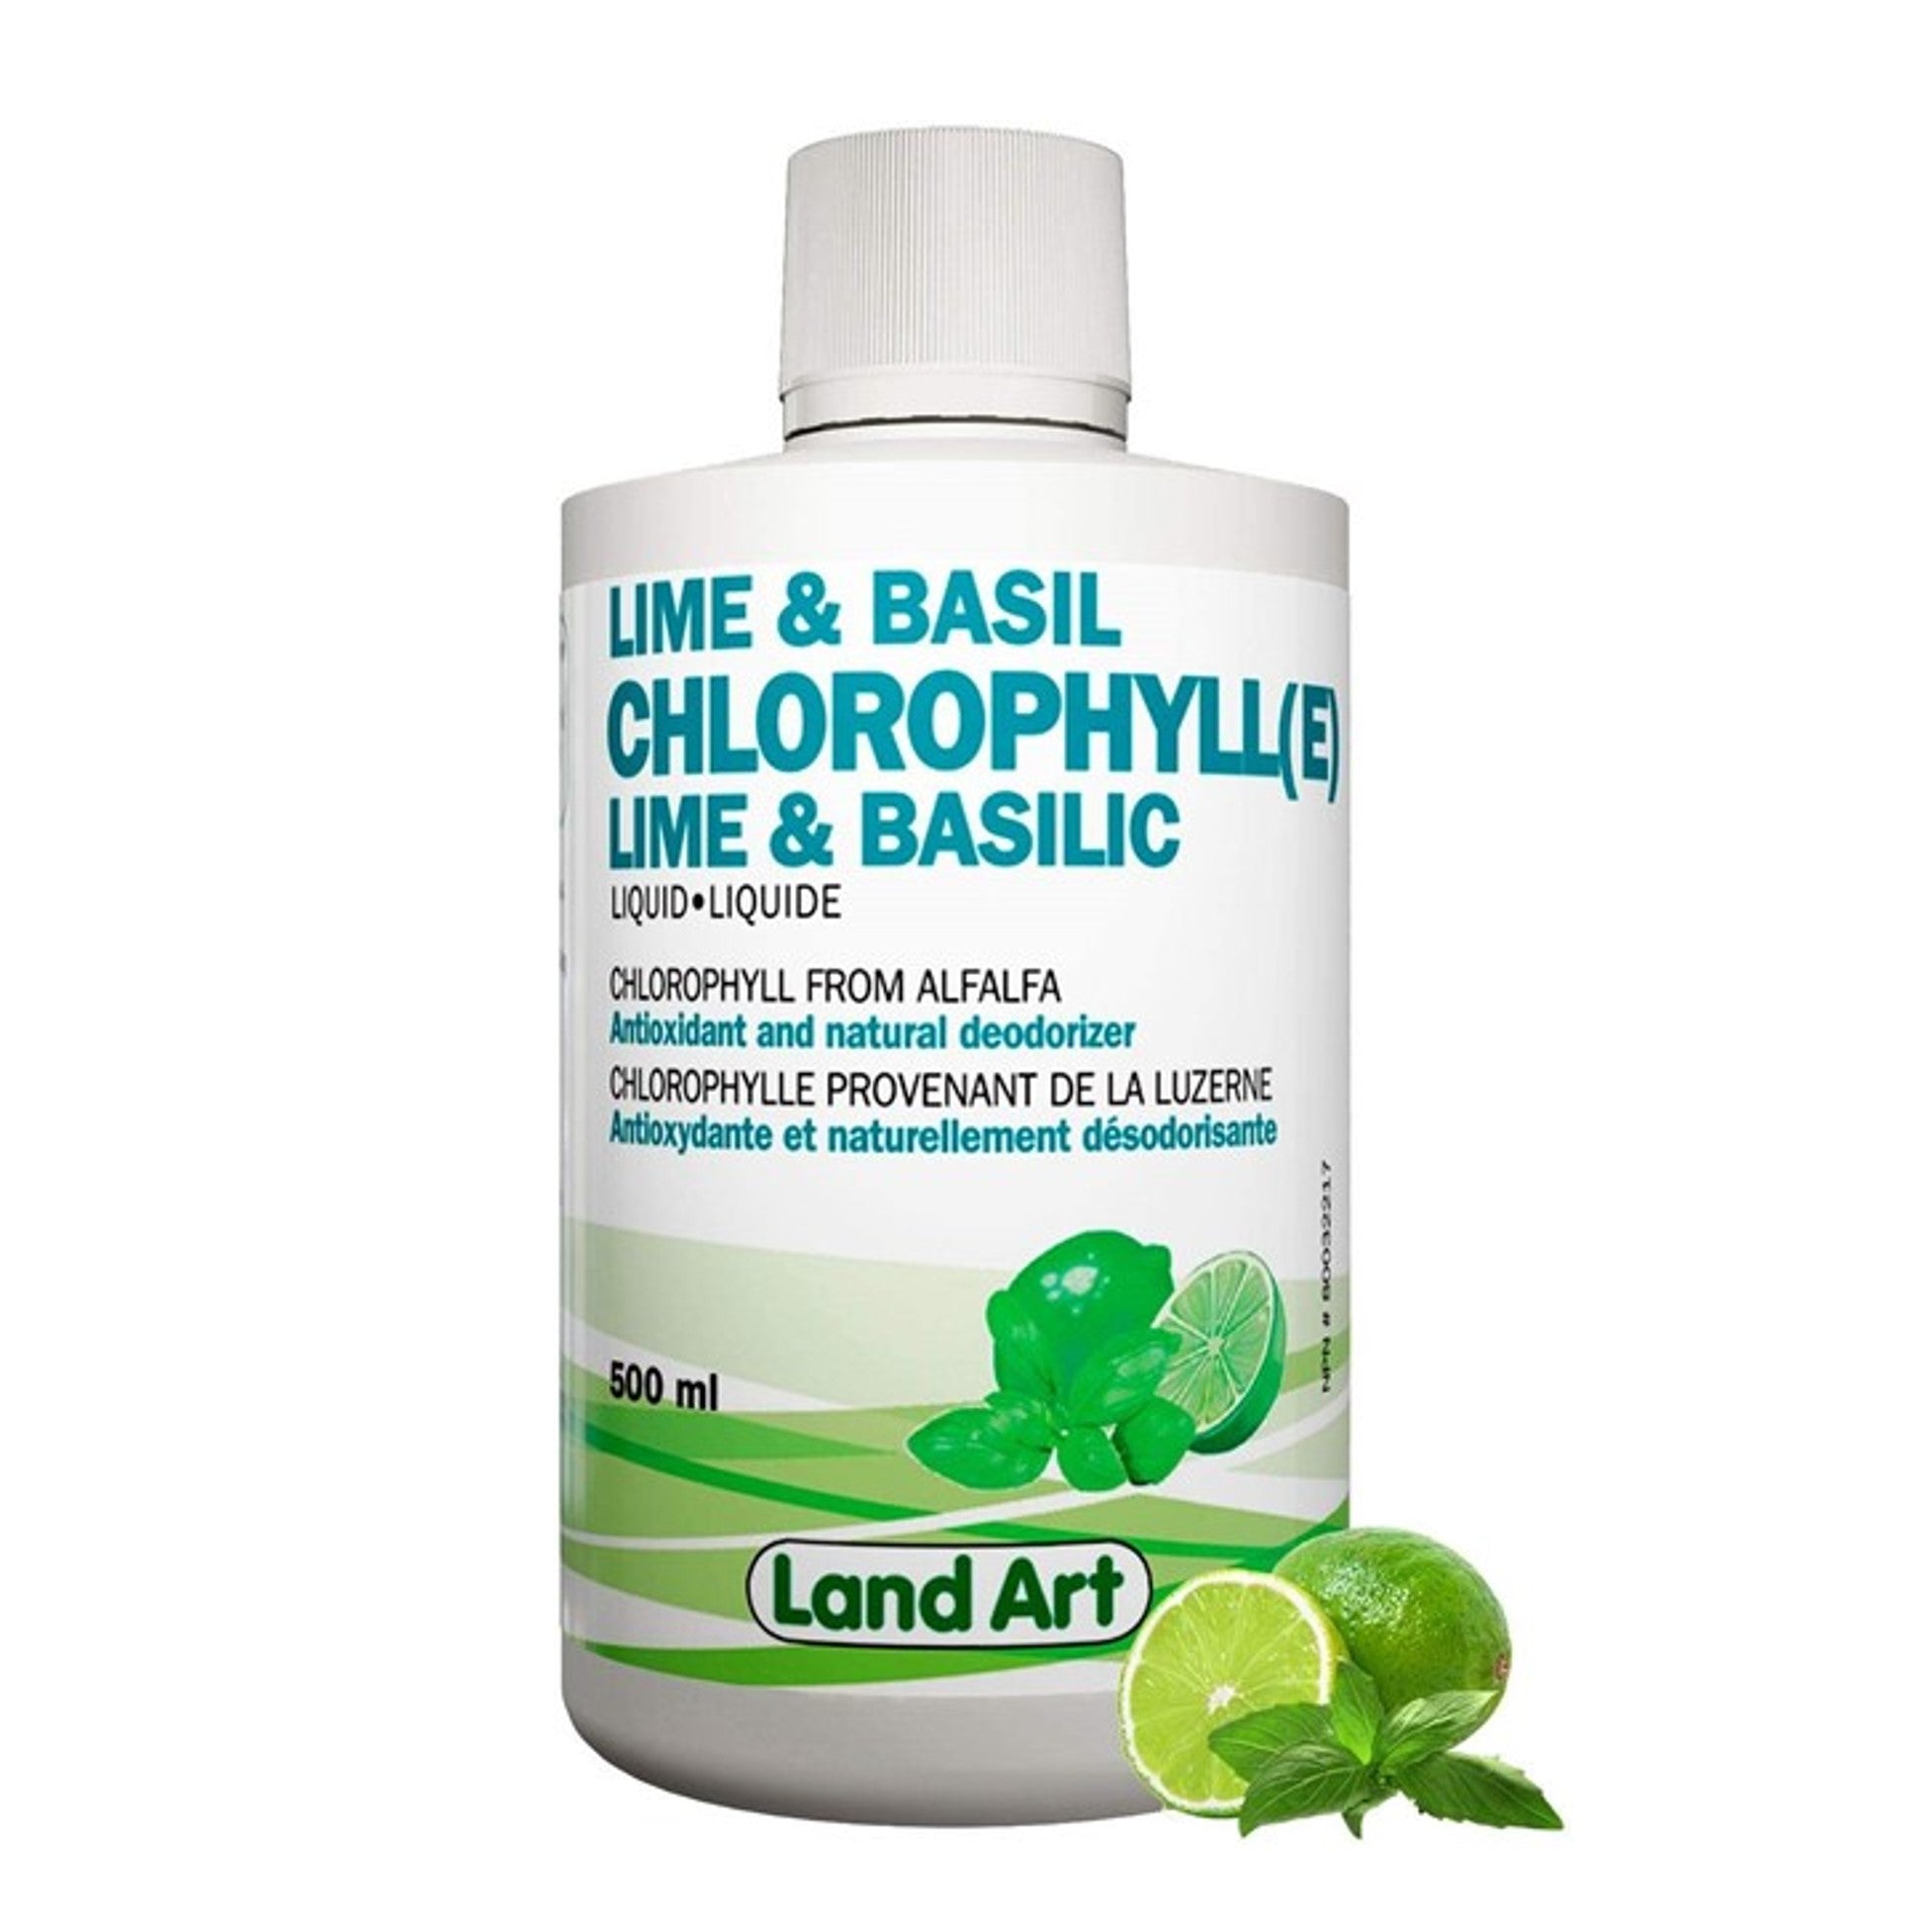 Land Art Chorophyll(e) 500ml